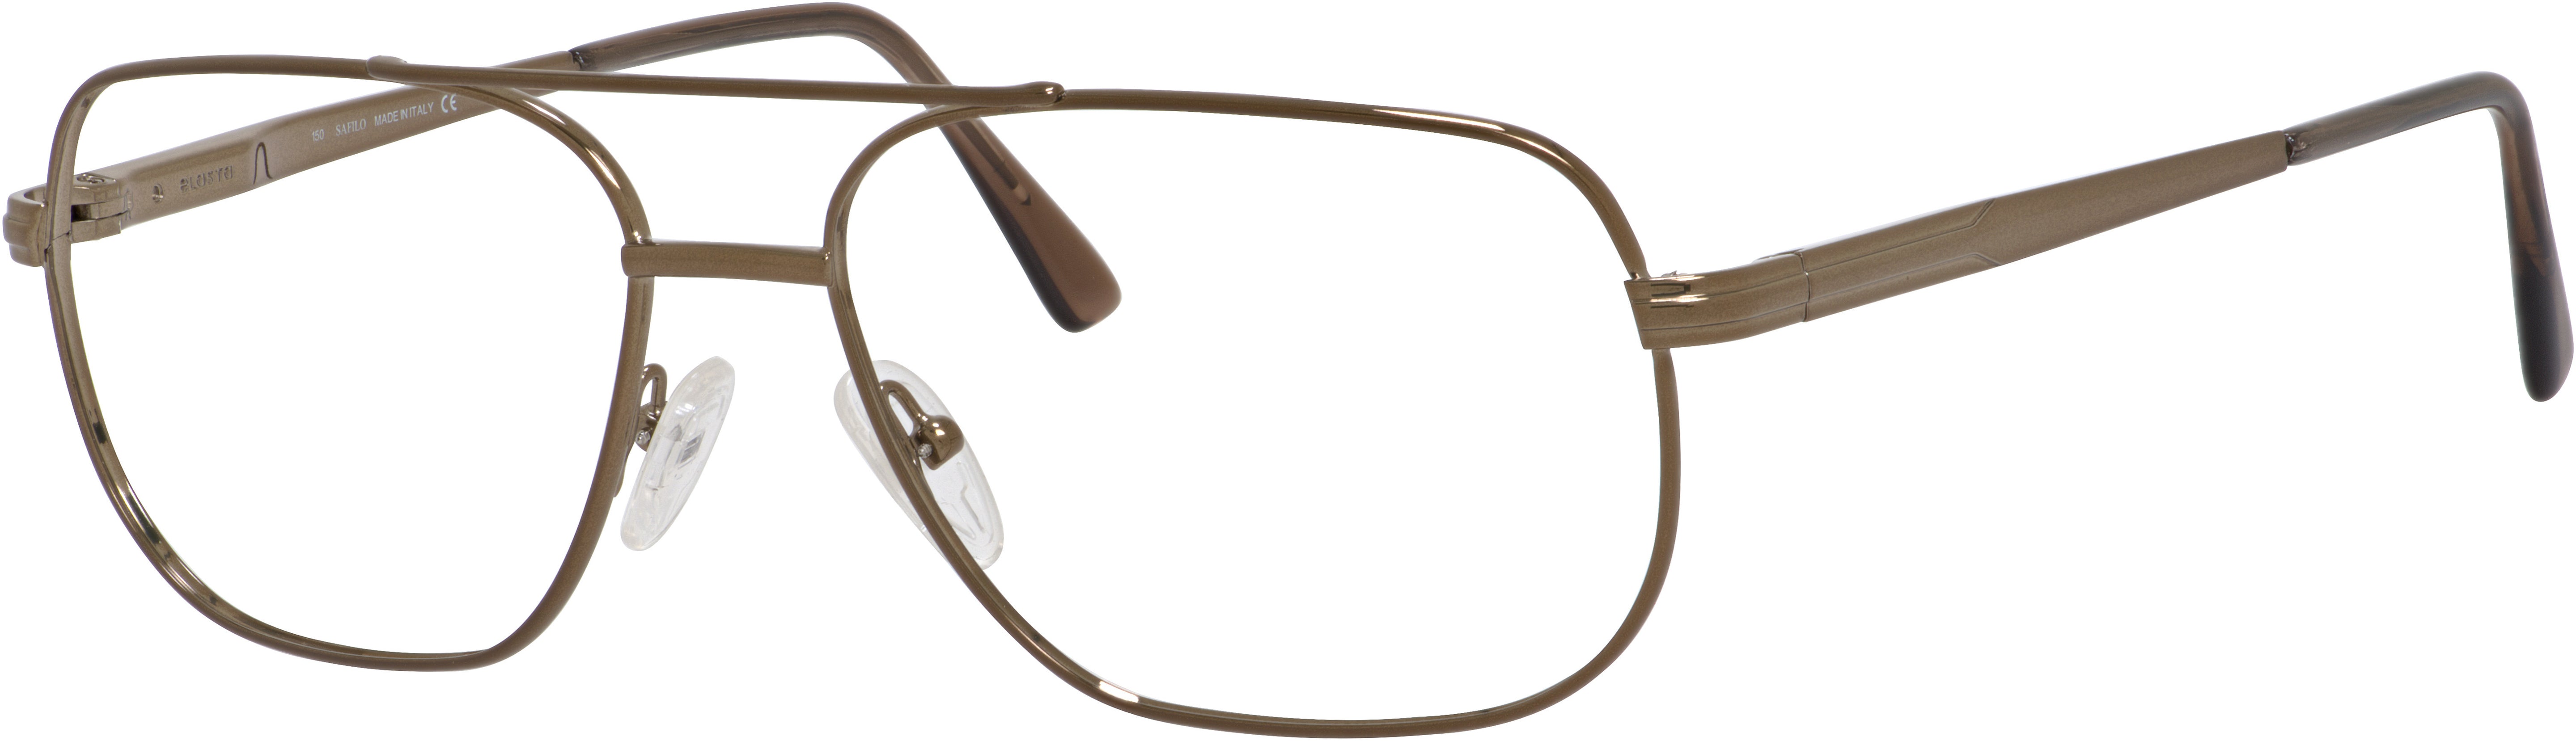  Elasta 7126 Rectangular Eyeglasses 09HM-09HM  Brown (00 Demo Lens)